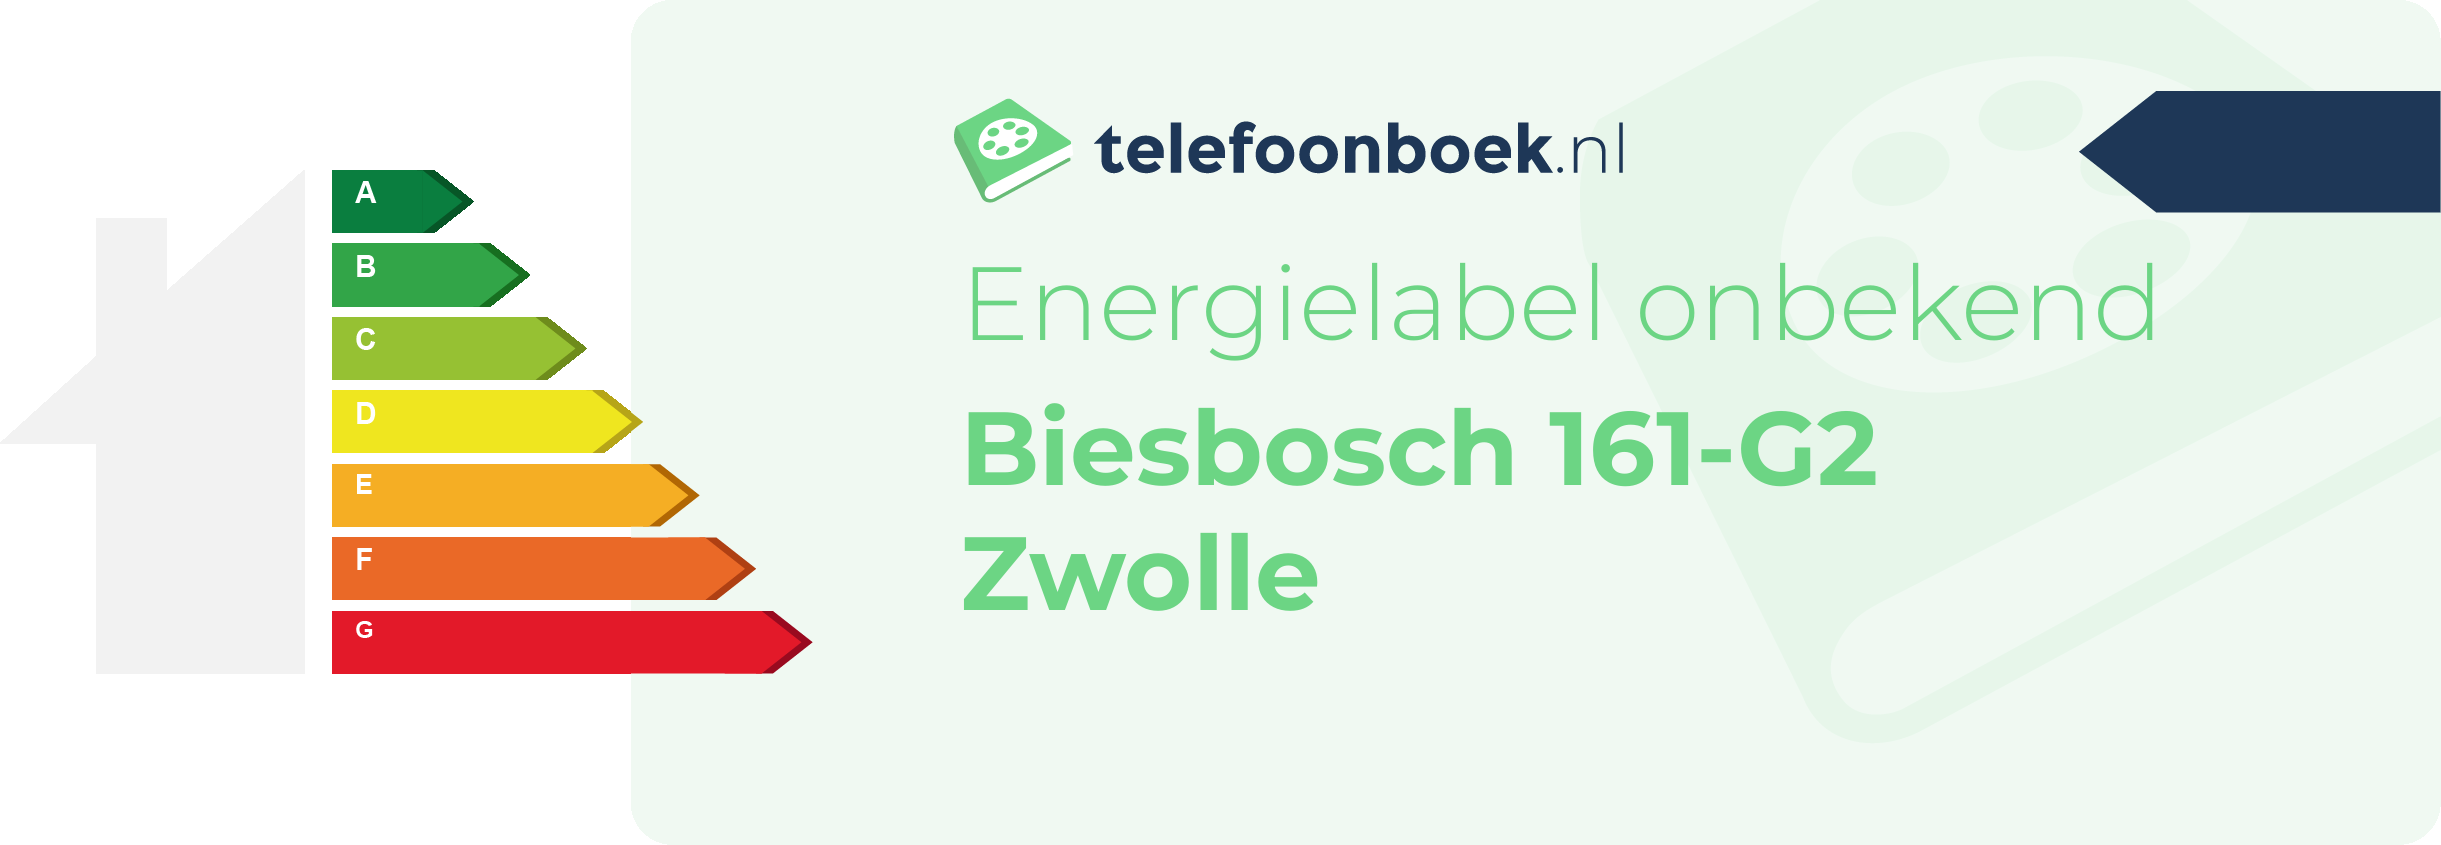 Energielabel Biesbosch 161-G2 Zwolle